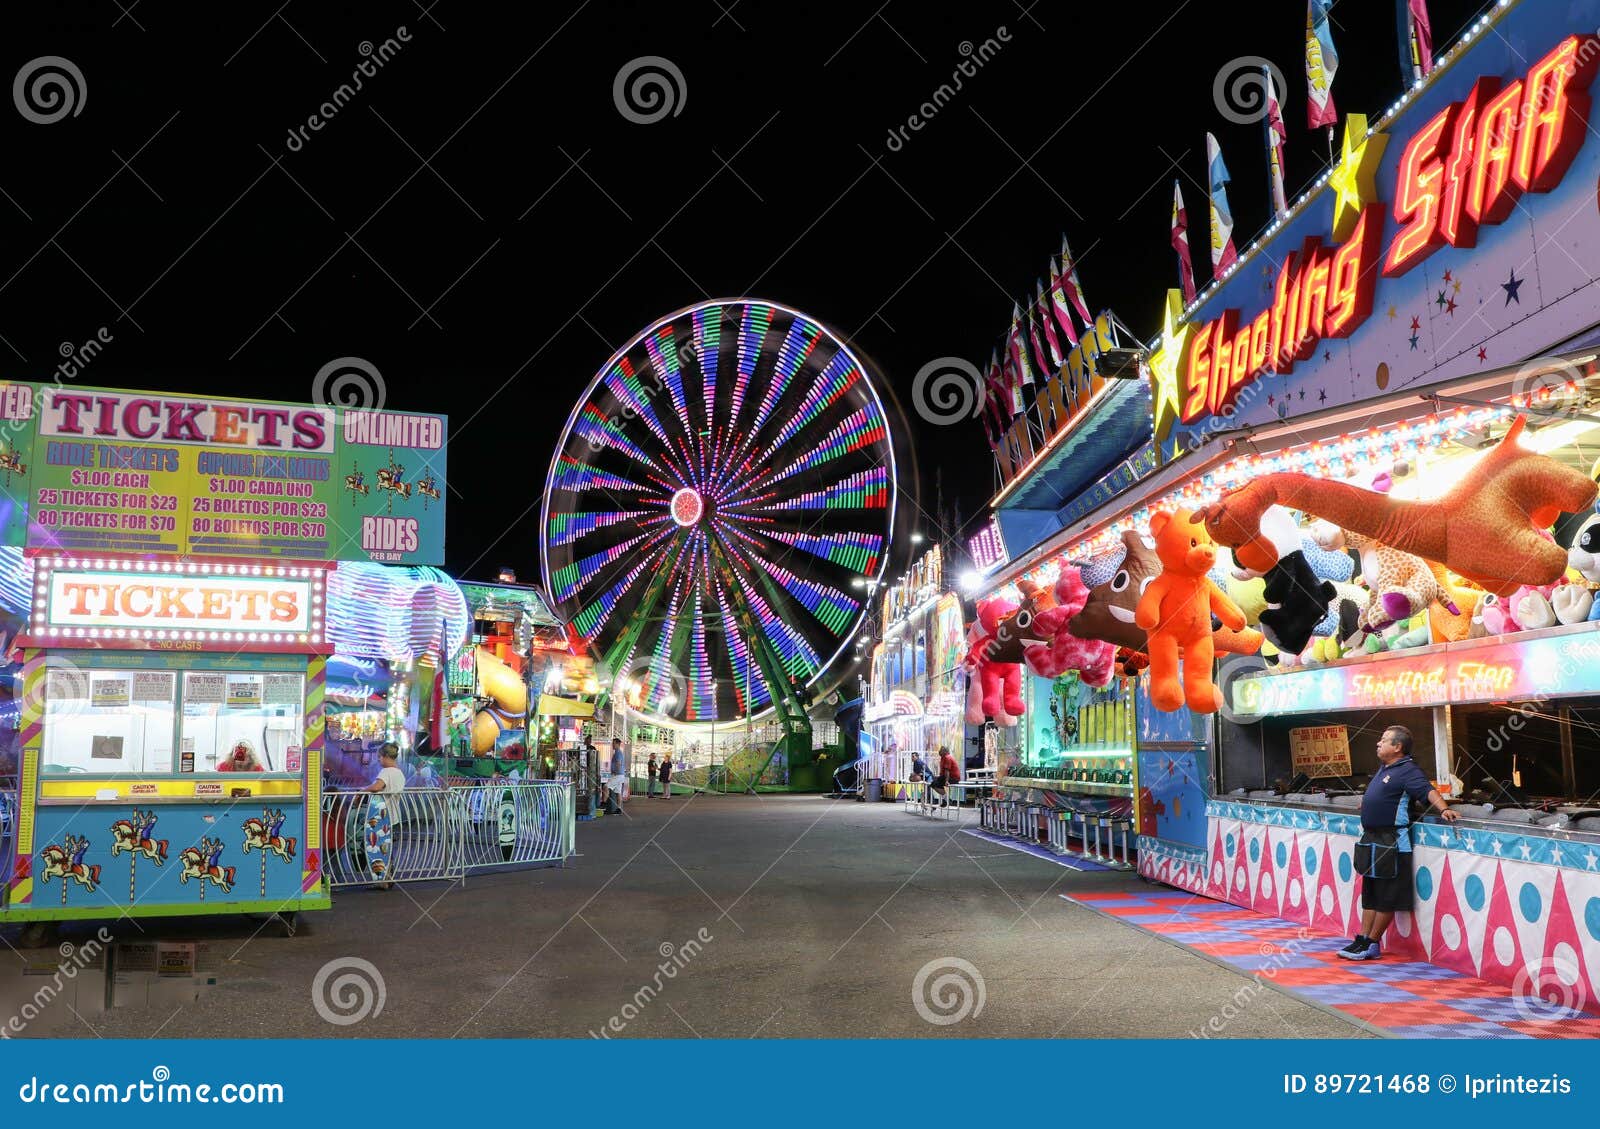 Carnival Photography State fair Night Photo Digital download Hammerhead Amusement Park Fine art Printable art Carnival photo